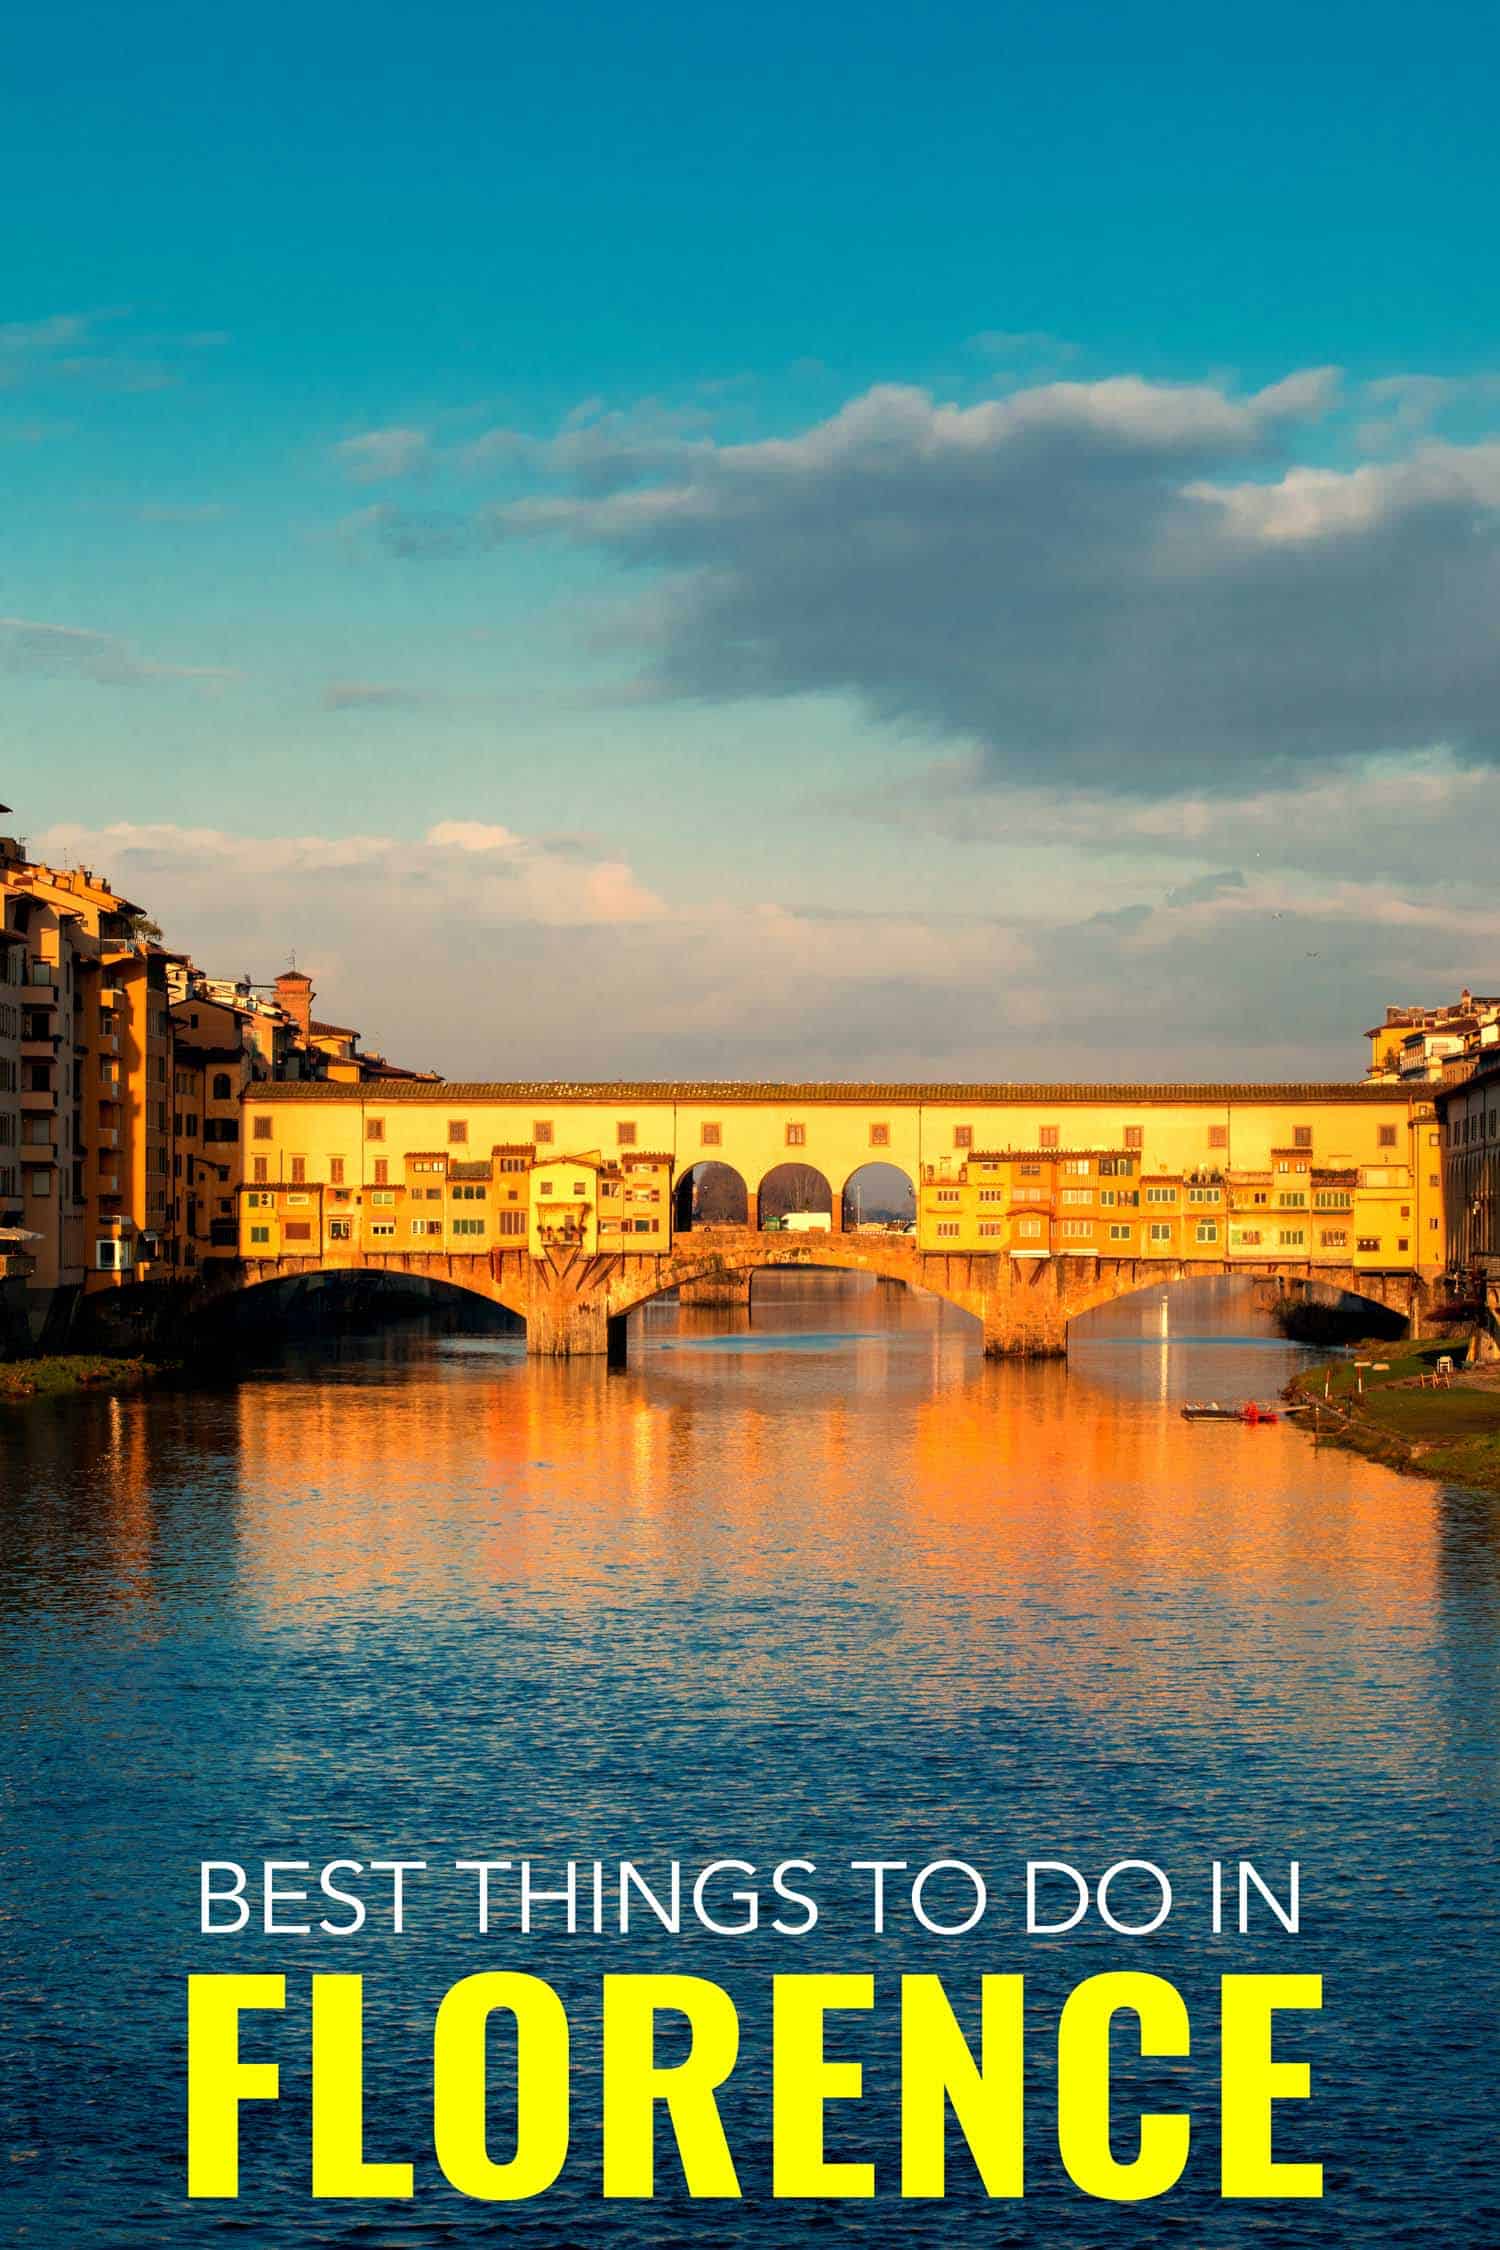 Bridge in Florence Italy